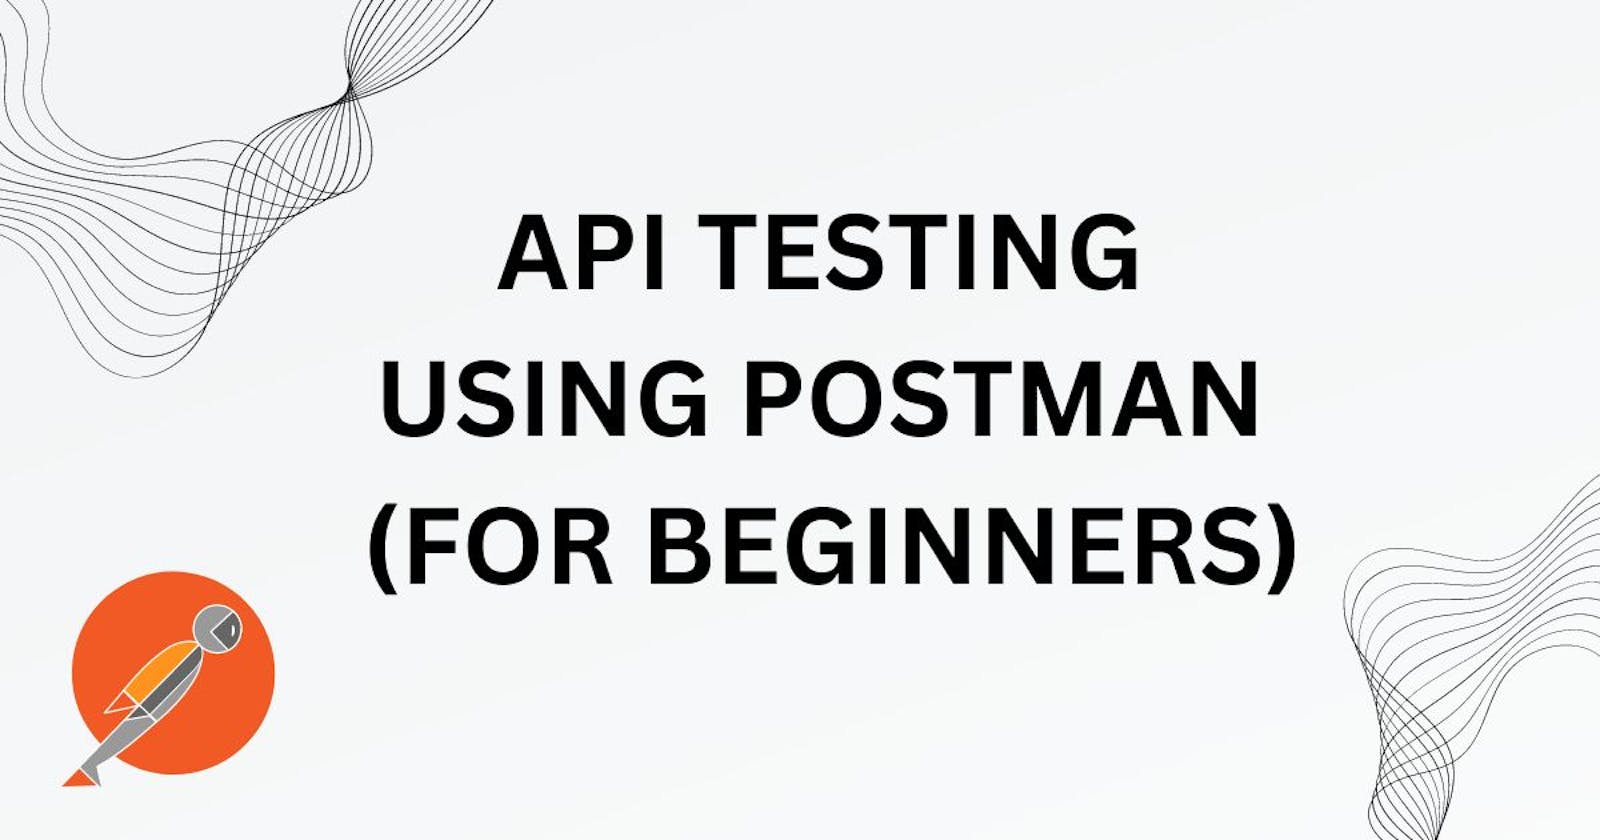 API Testing Using Postman For Beginners